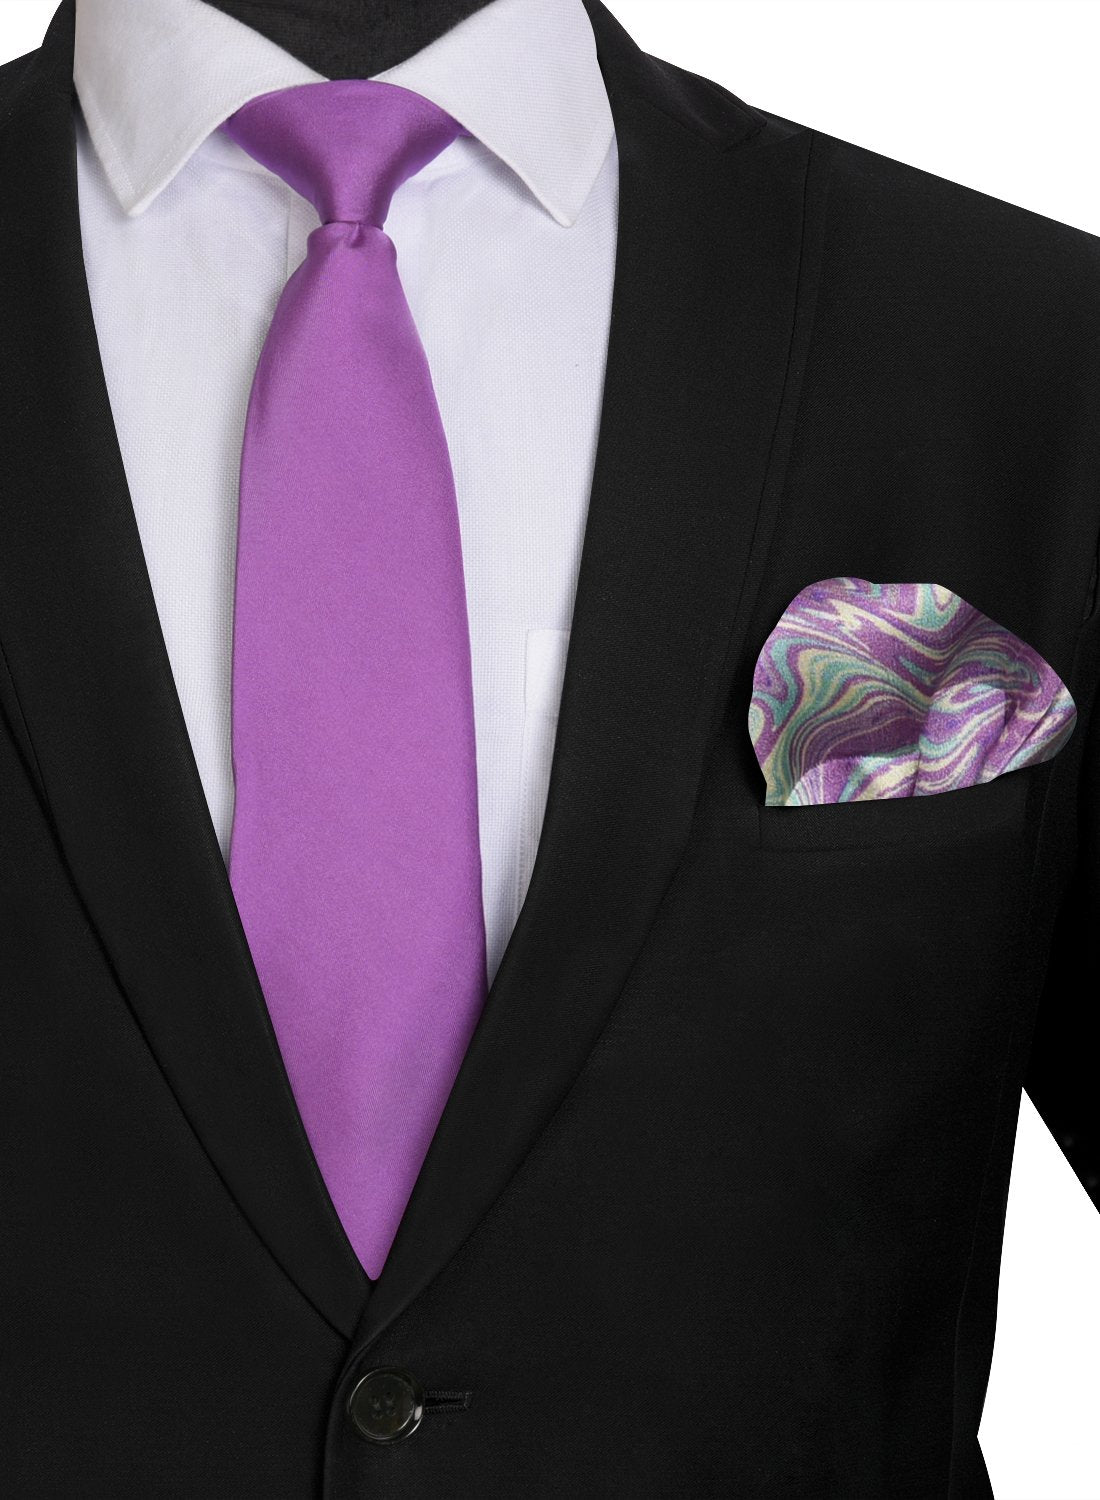 Chokore Deep Purple color Silk Tie & Purple Silk Pocket Square set